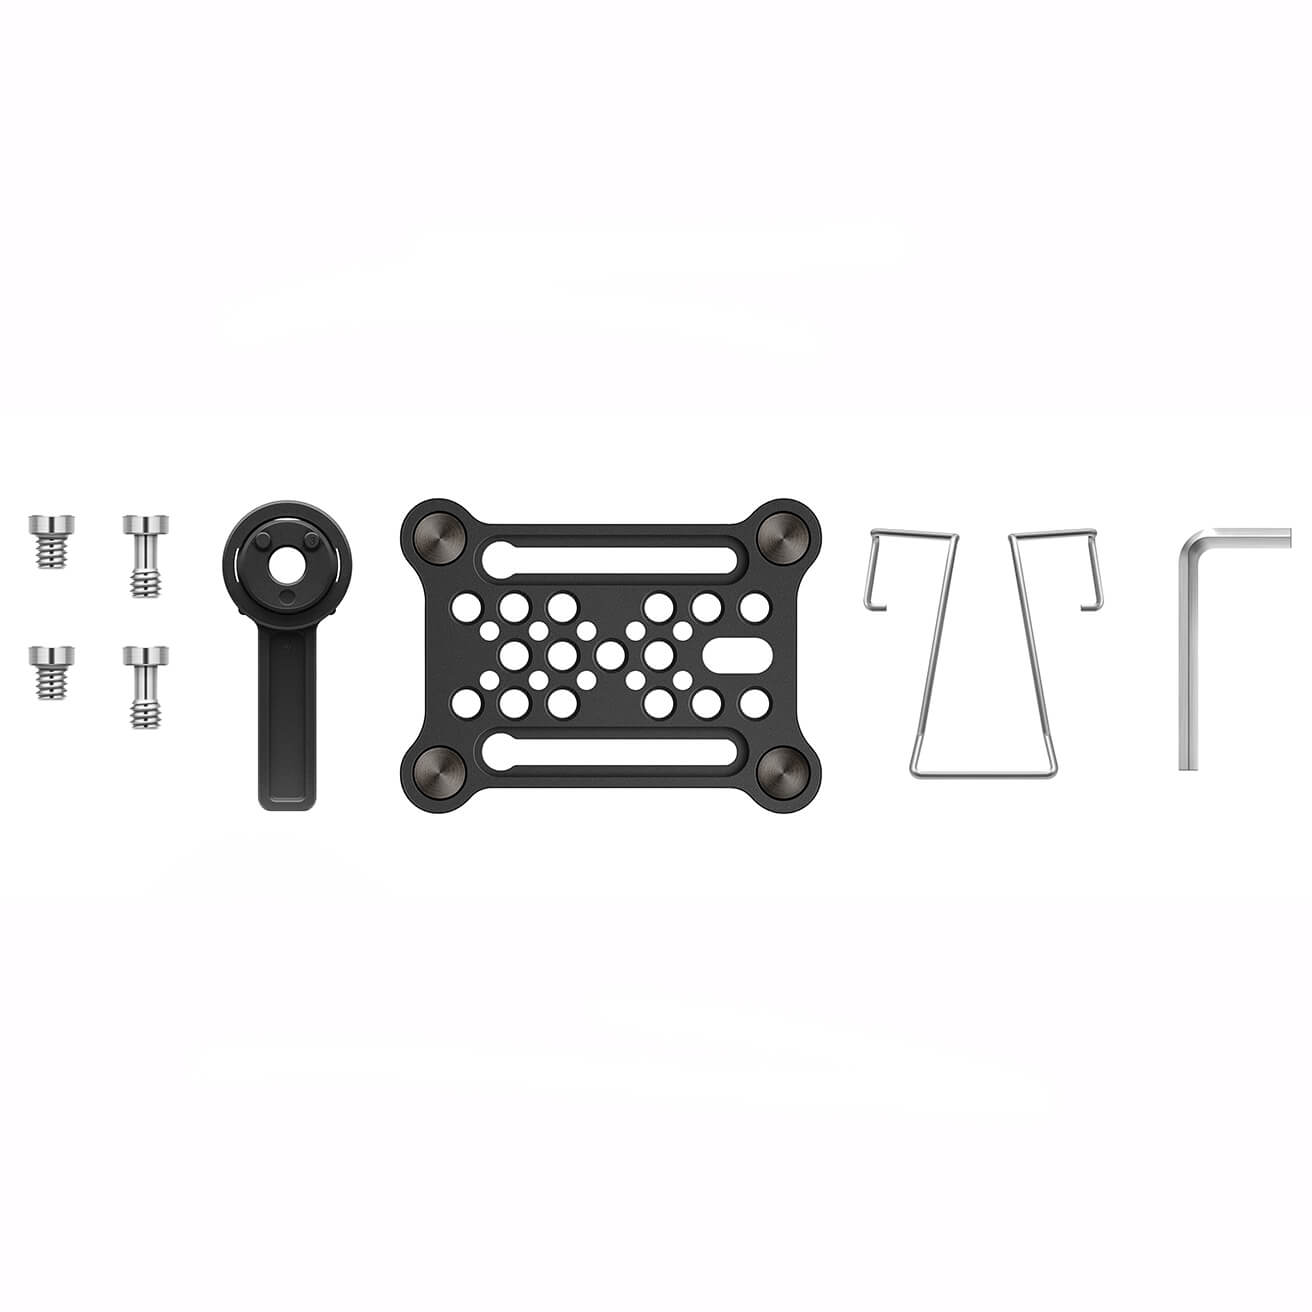 Sennheiser EW-DP Mounting kit (Mounting plate, cold shoe, belt clip and screws)